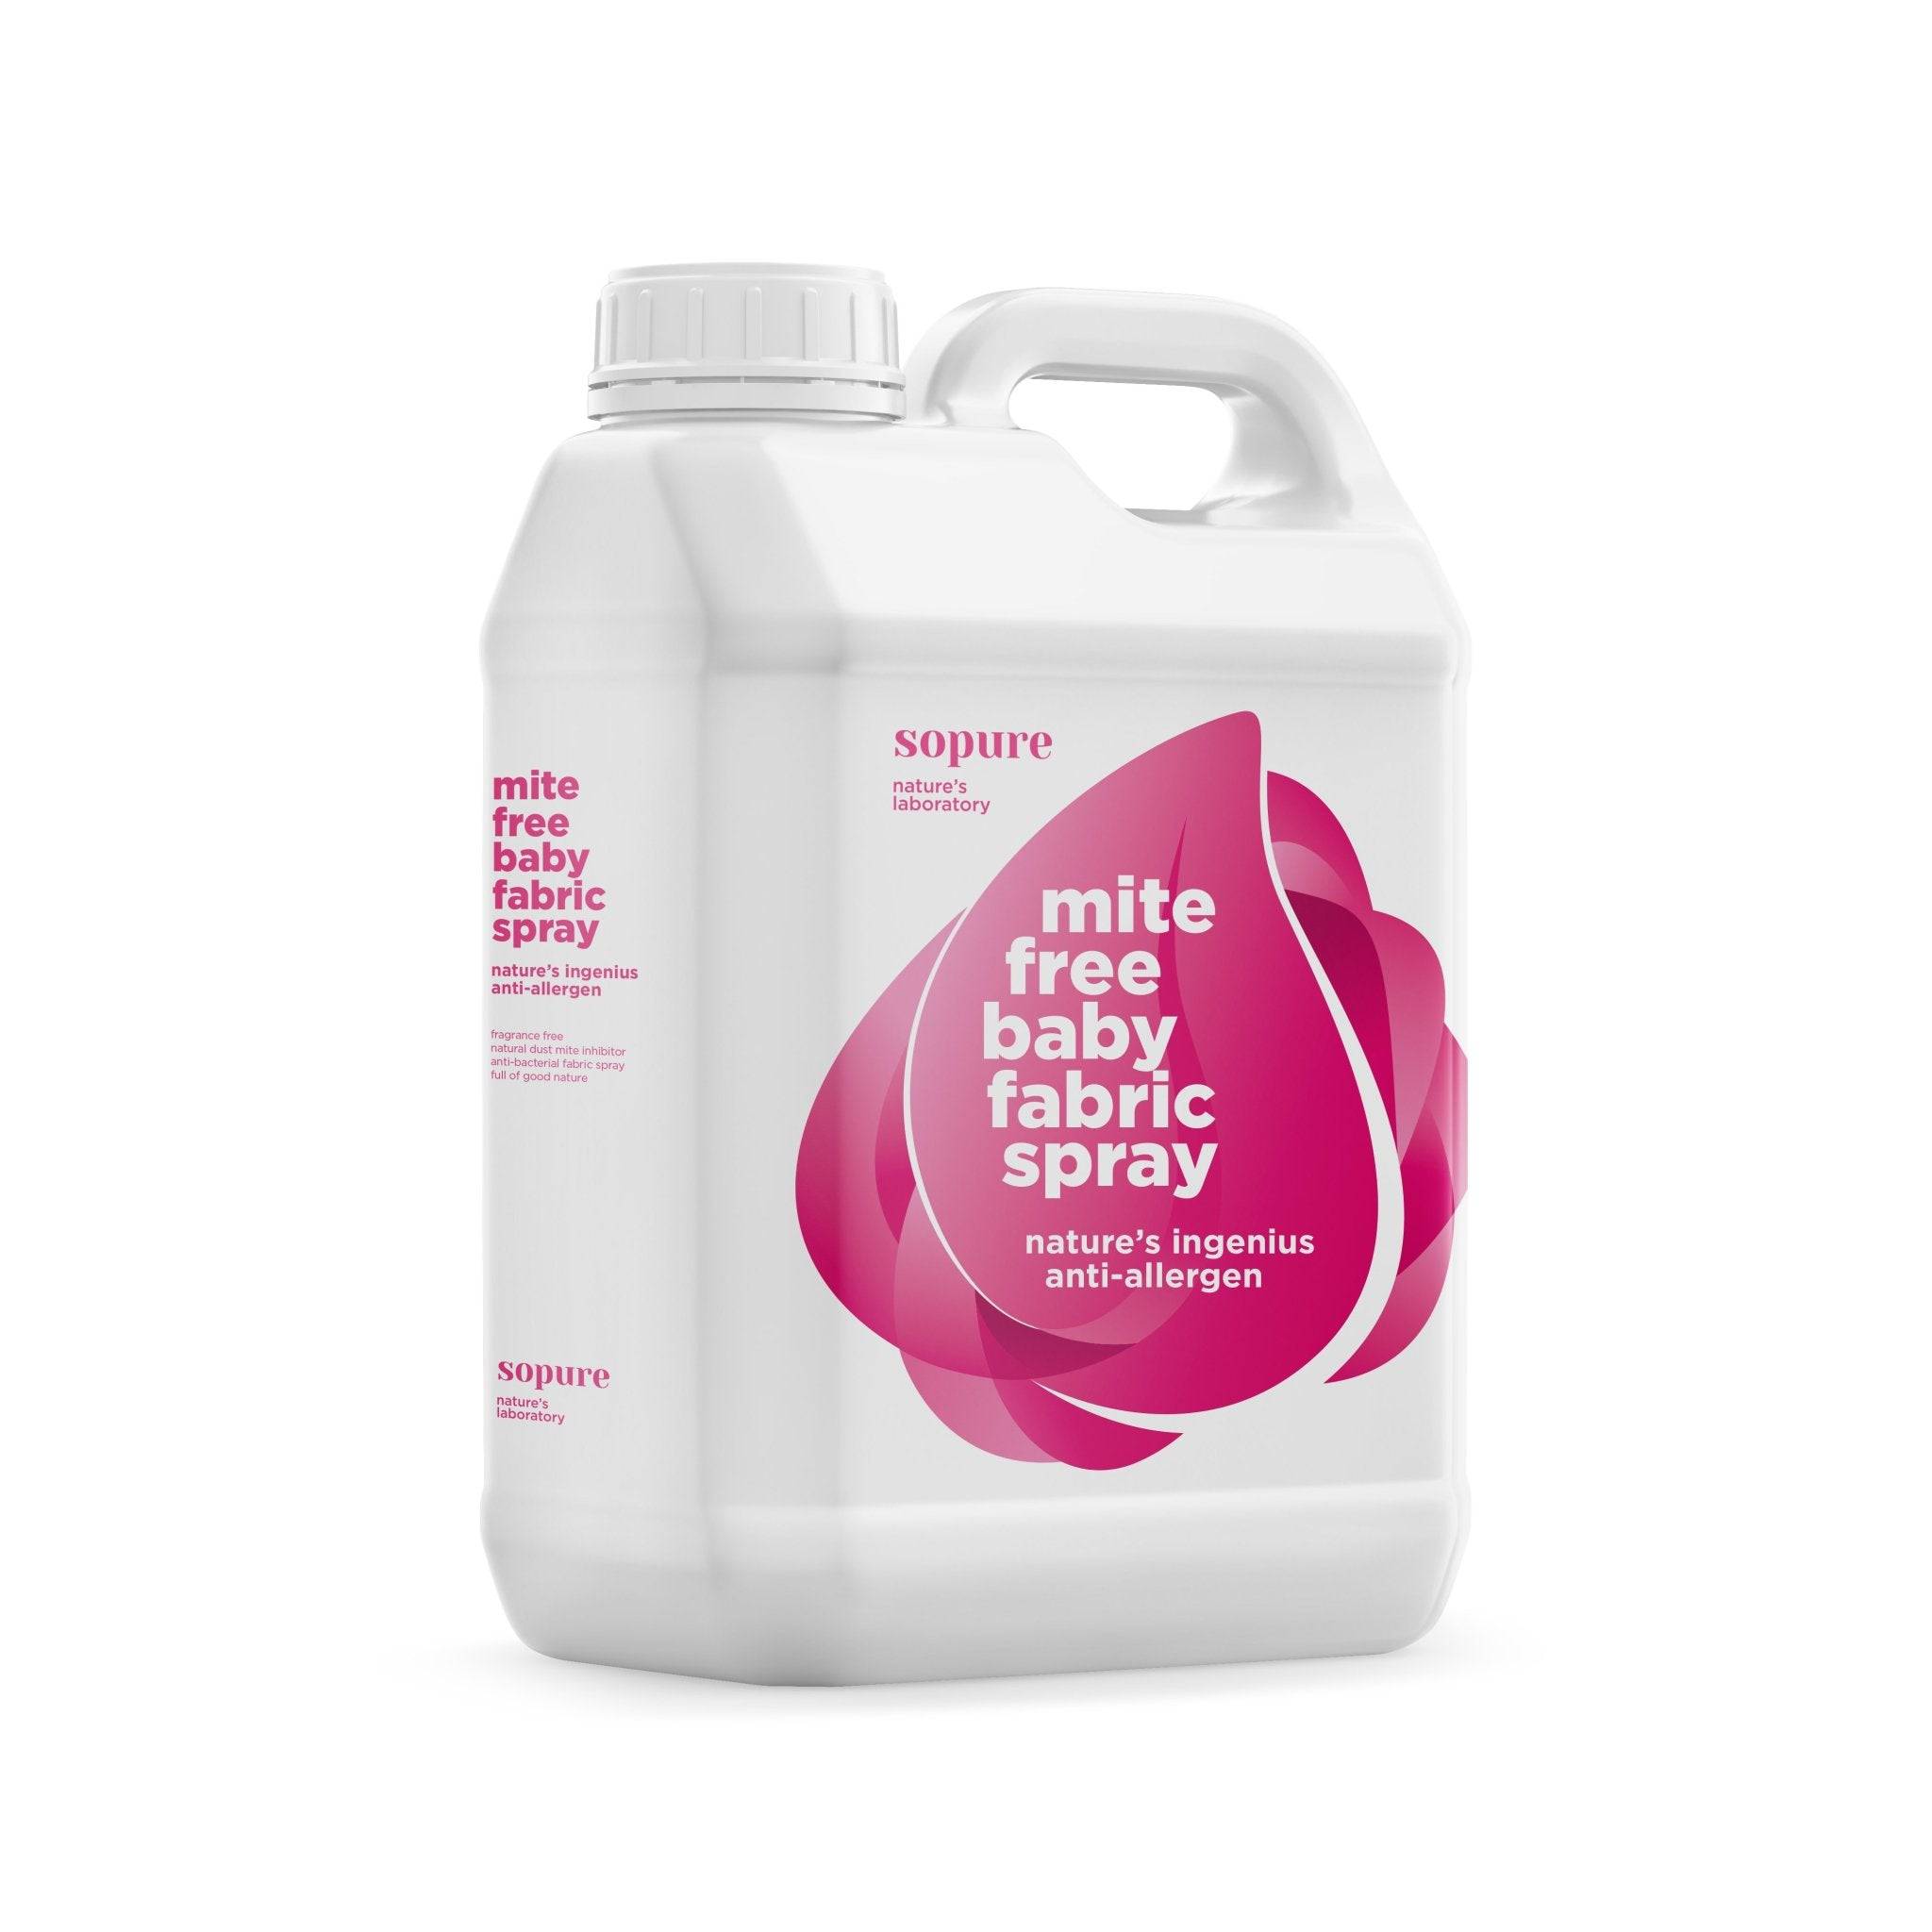 SoPure Mite-free Baby Fabric Spray - SoPure Naturally